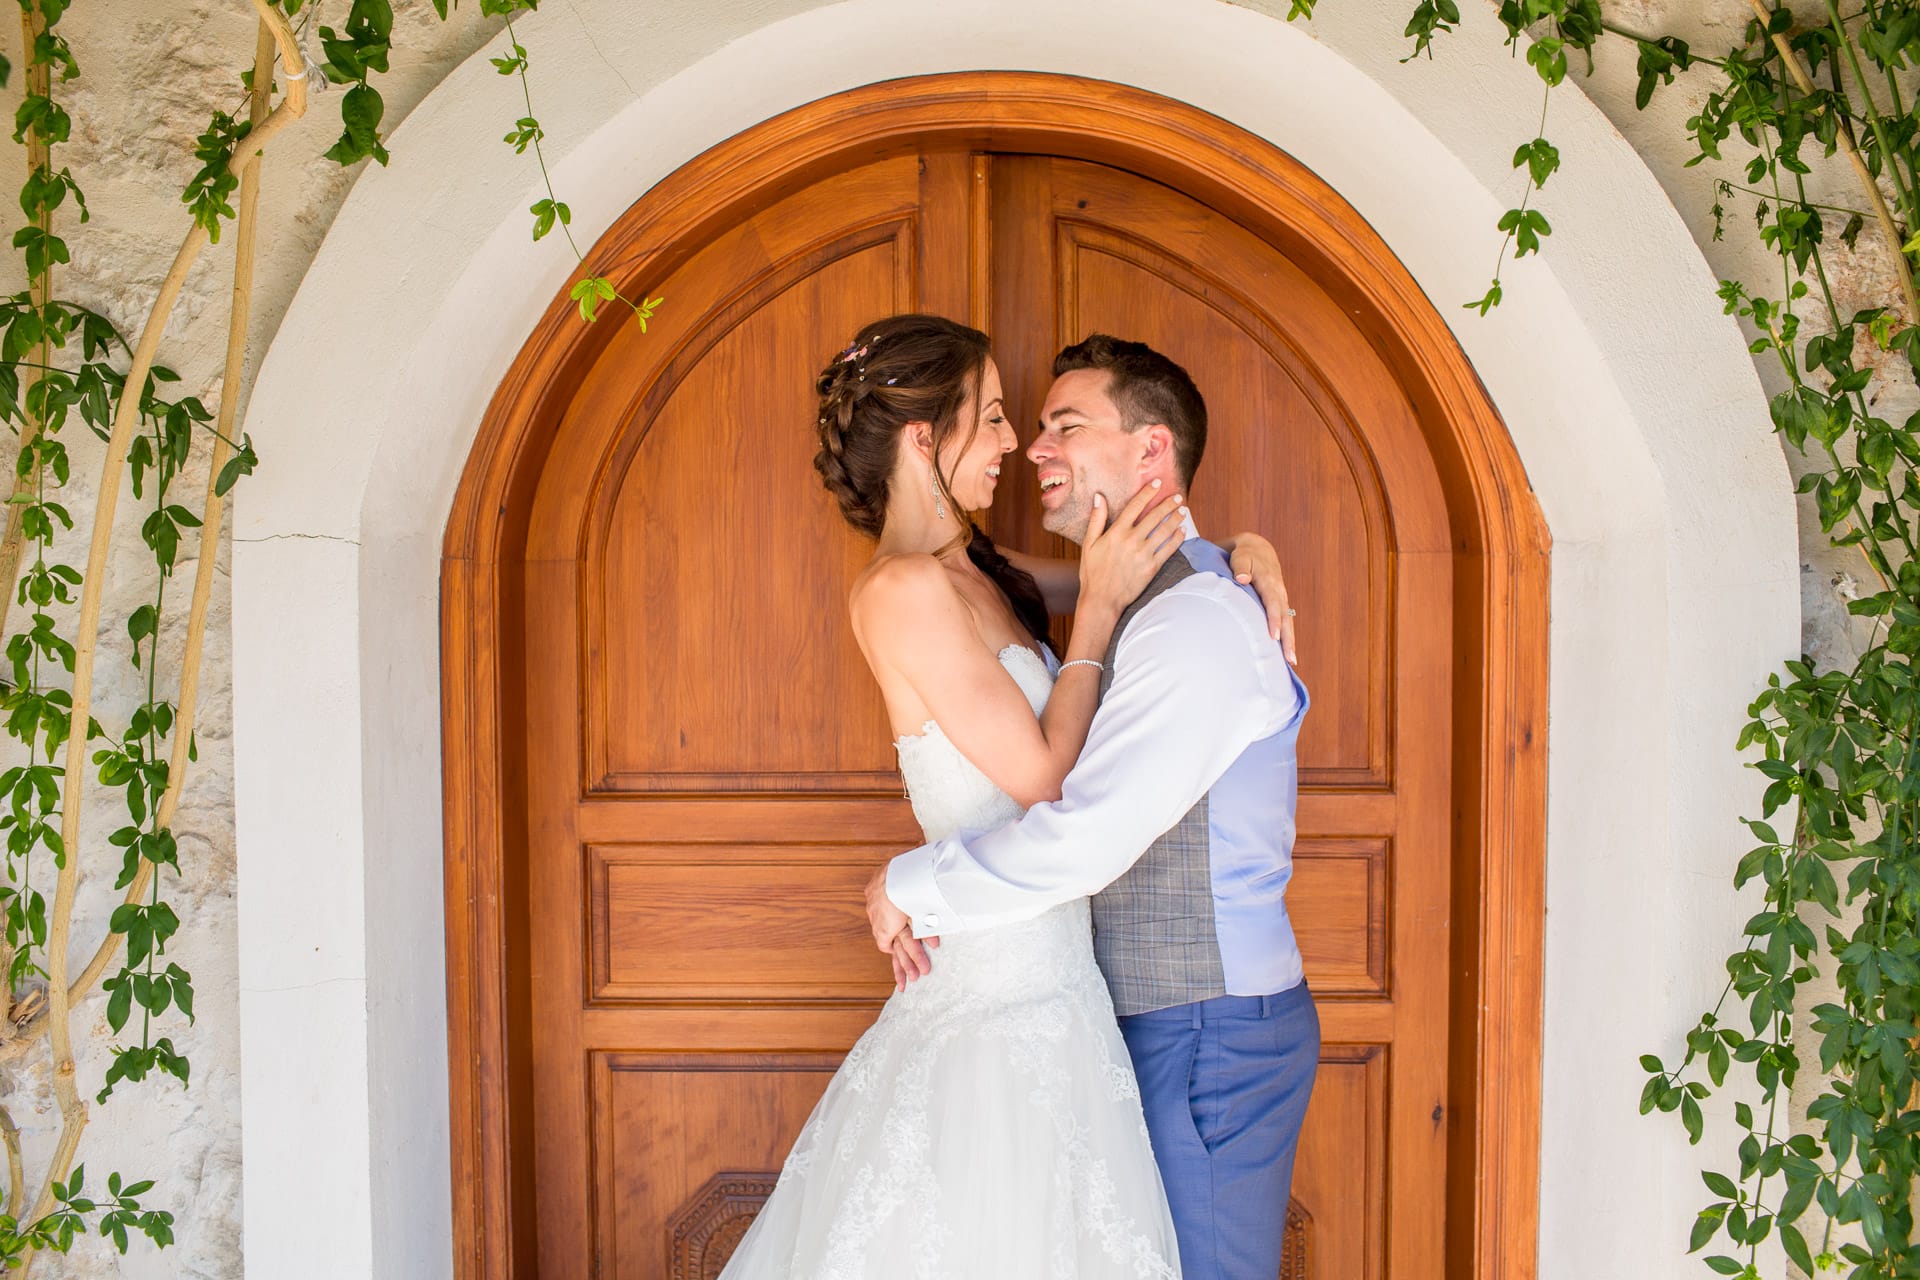 cute wedding couple in a doorway